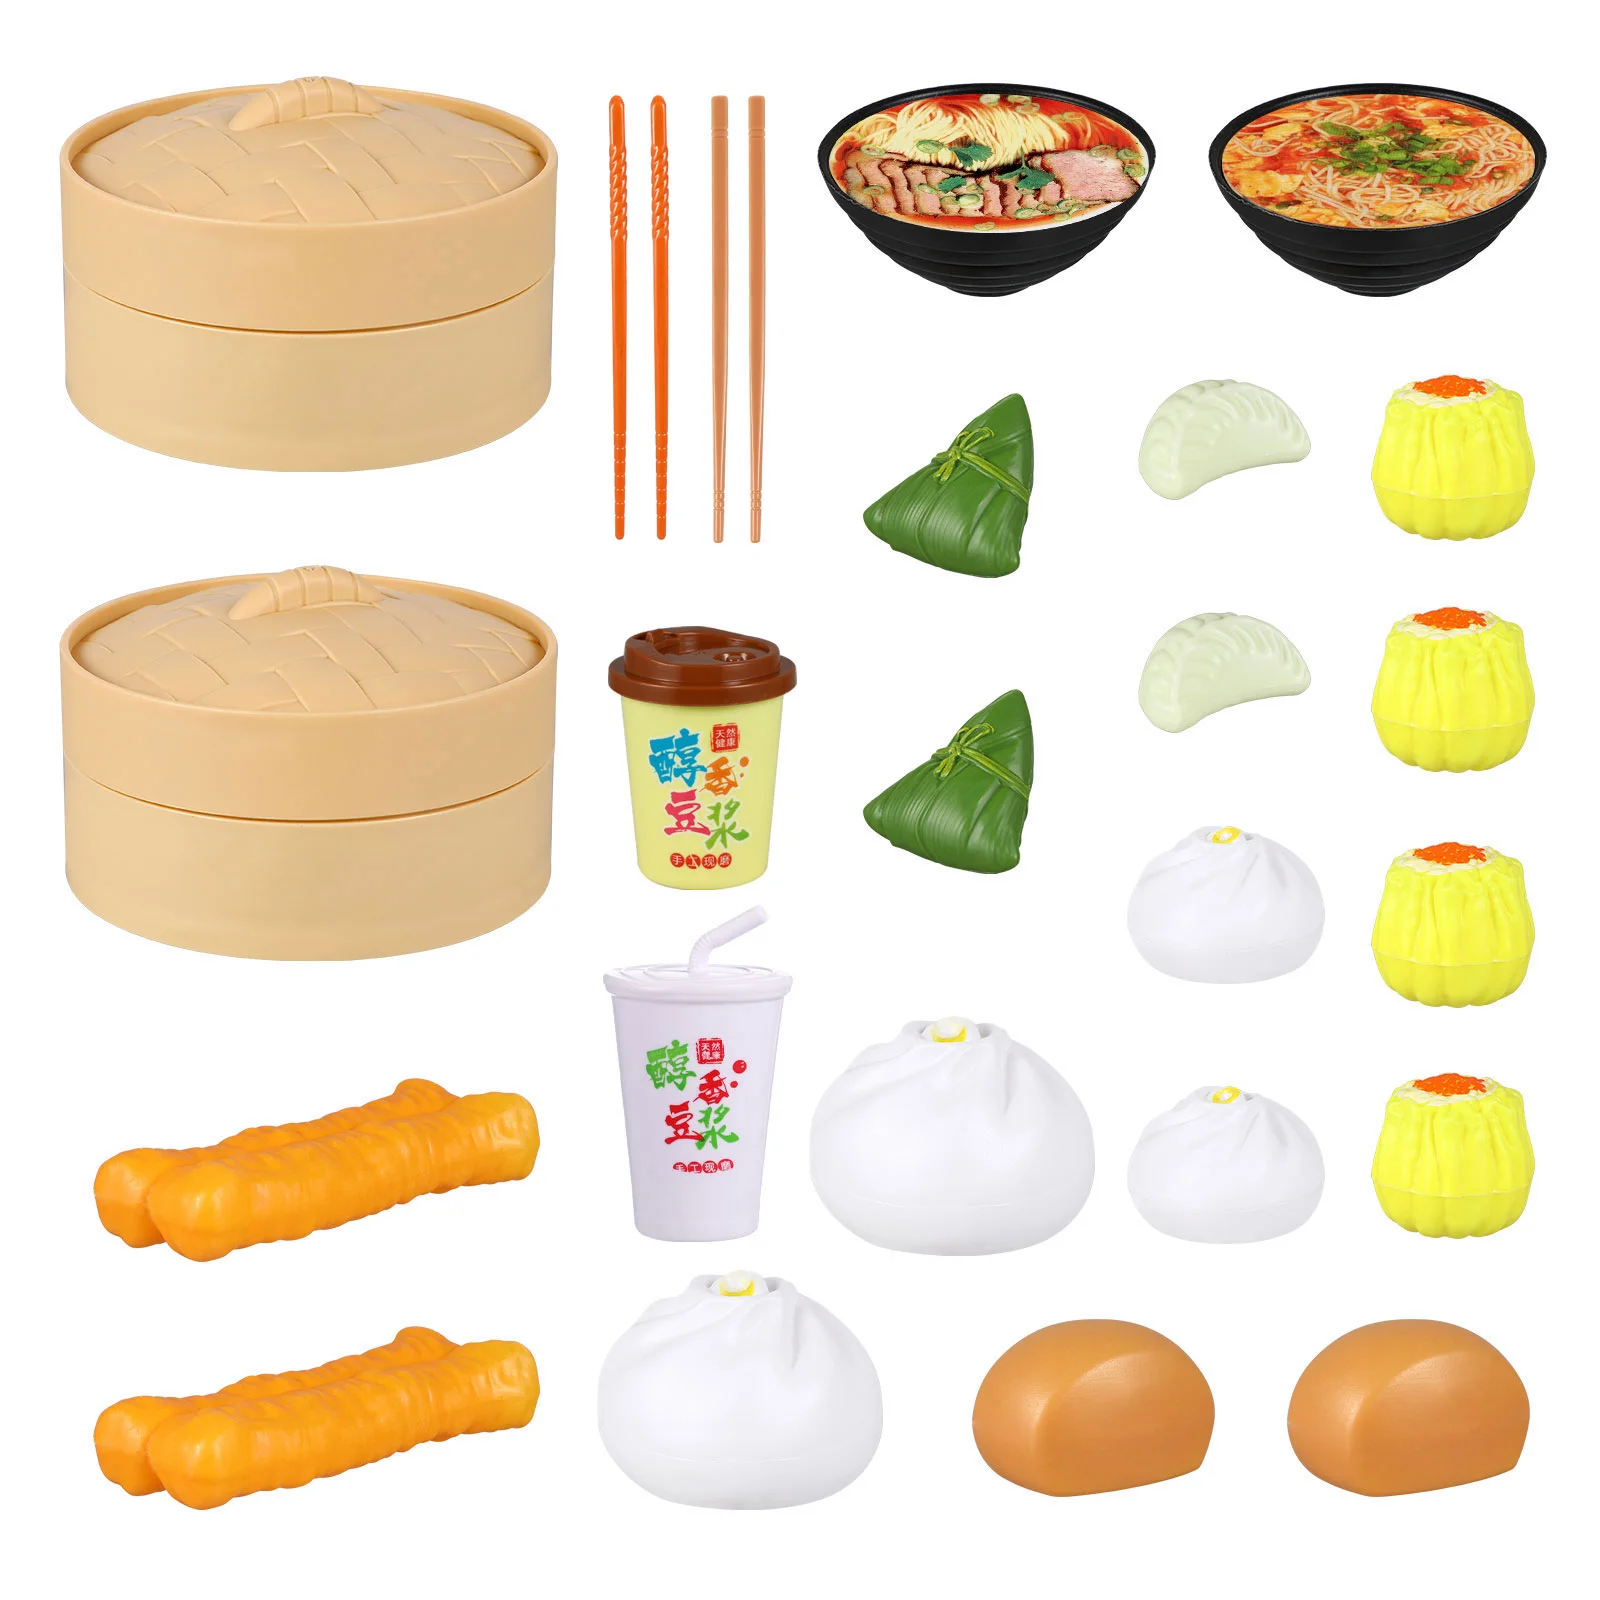 

Toy Kitchen Toys Play Breakfast Kidspretend Chinese Set Fake Cooking Mini Accessories Setsplayset Miniature Realistic Simulation